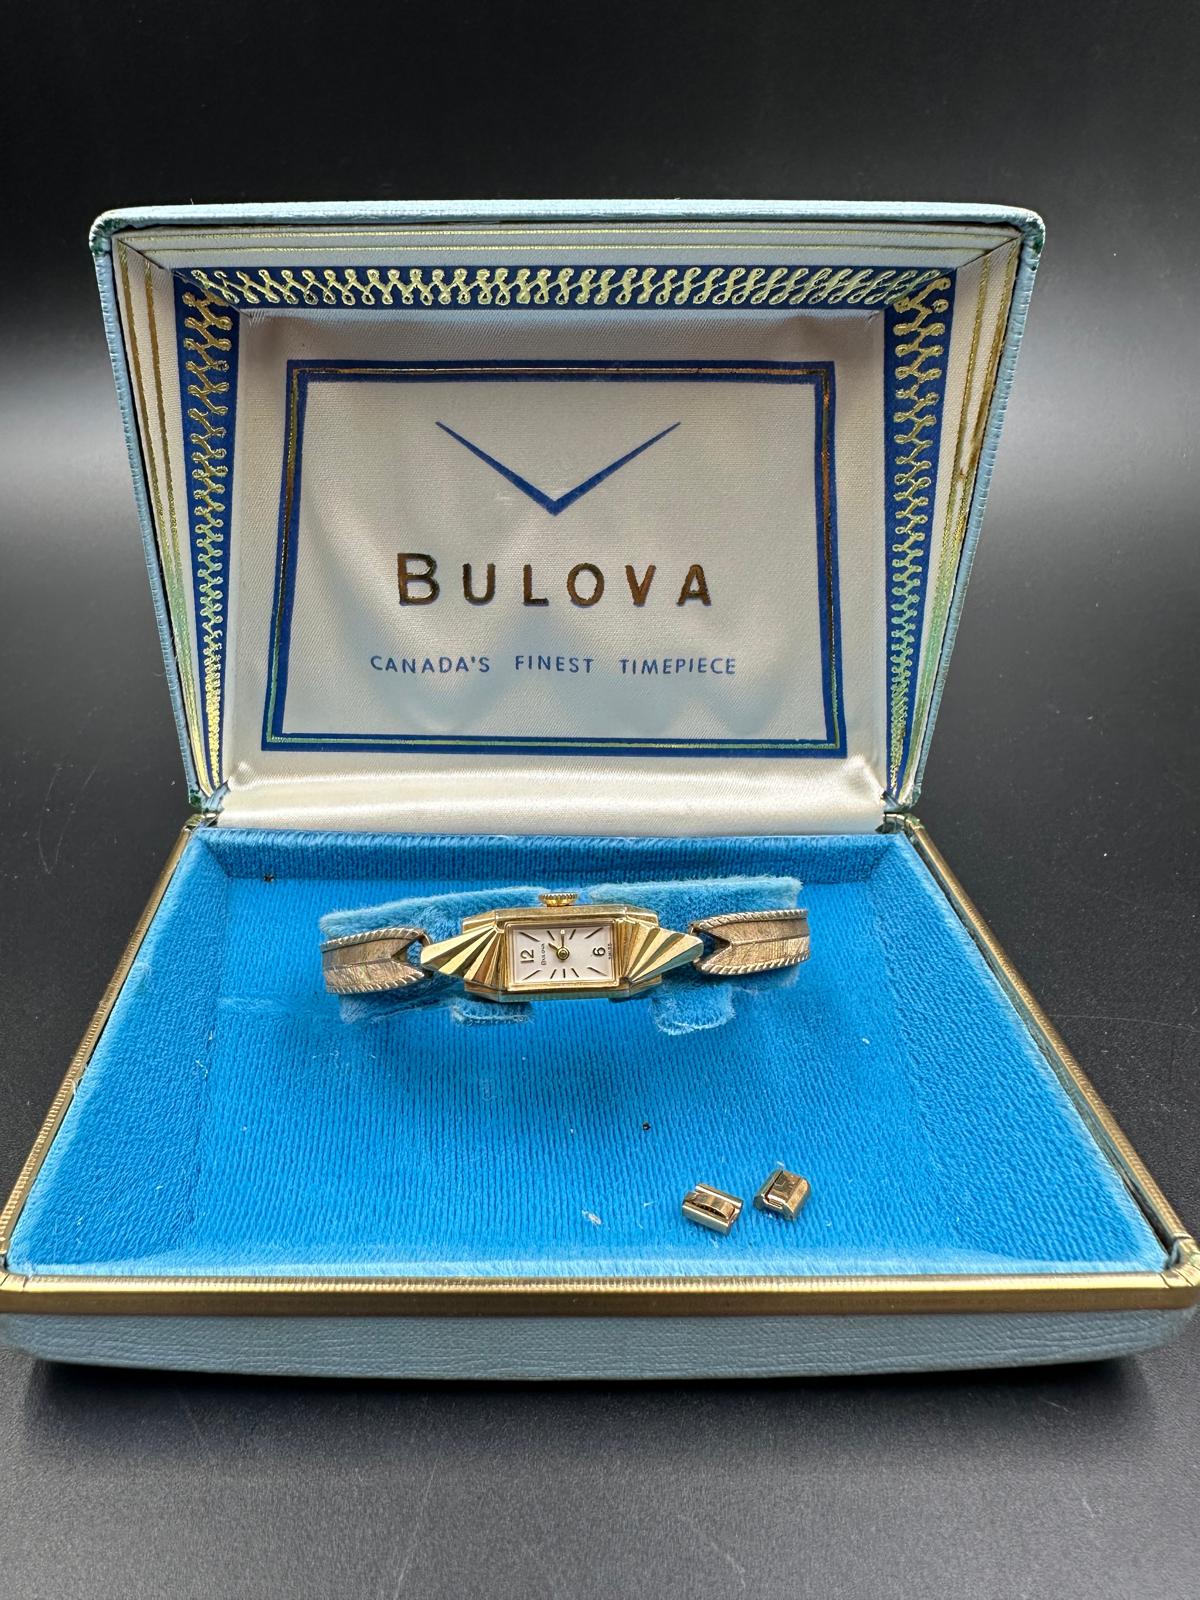 A 14k yellow gold Bulova ladies wristwatch on gold plated bracelet with original box etc